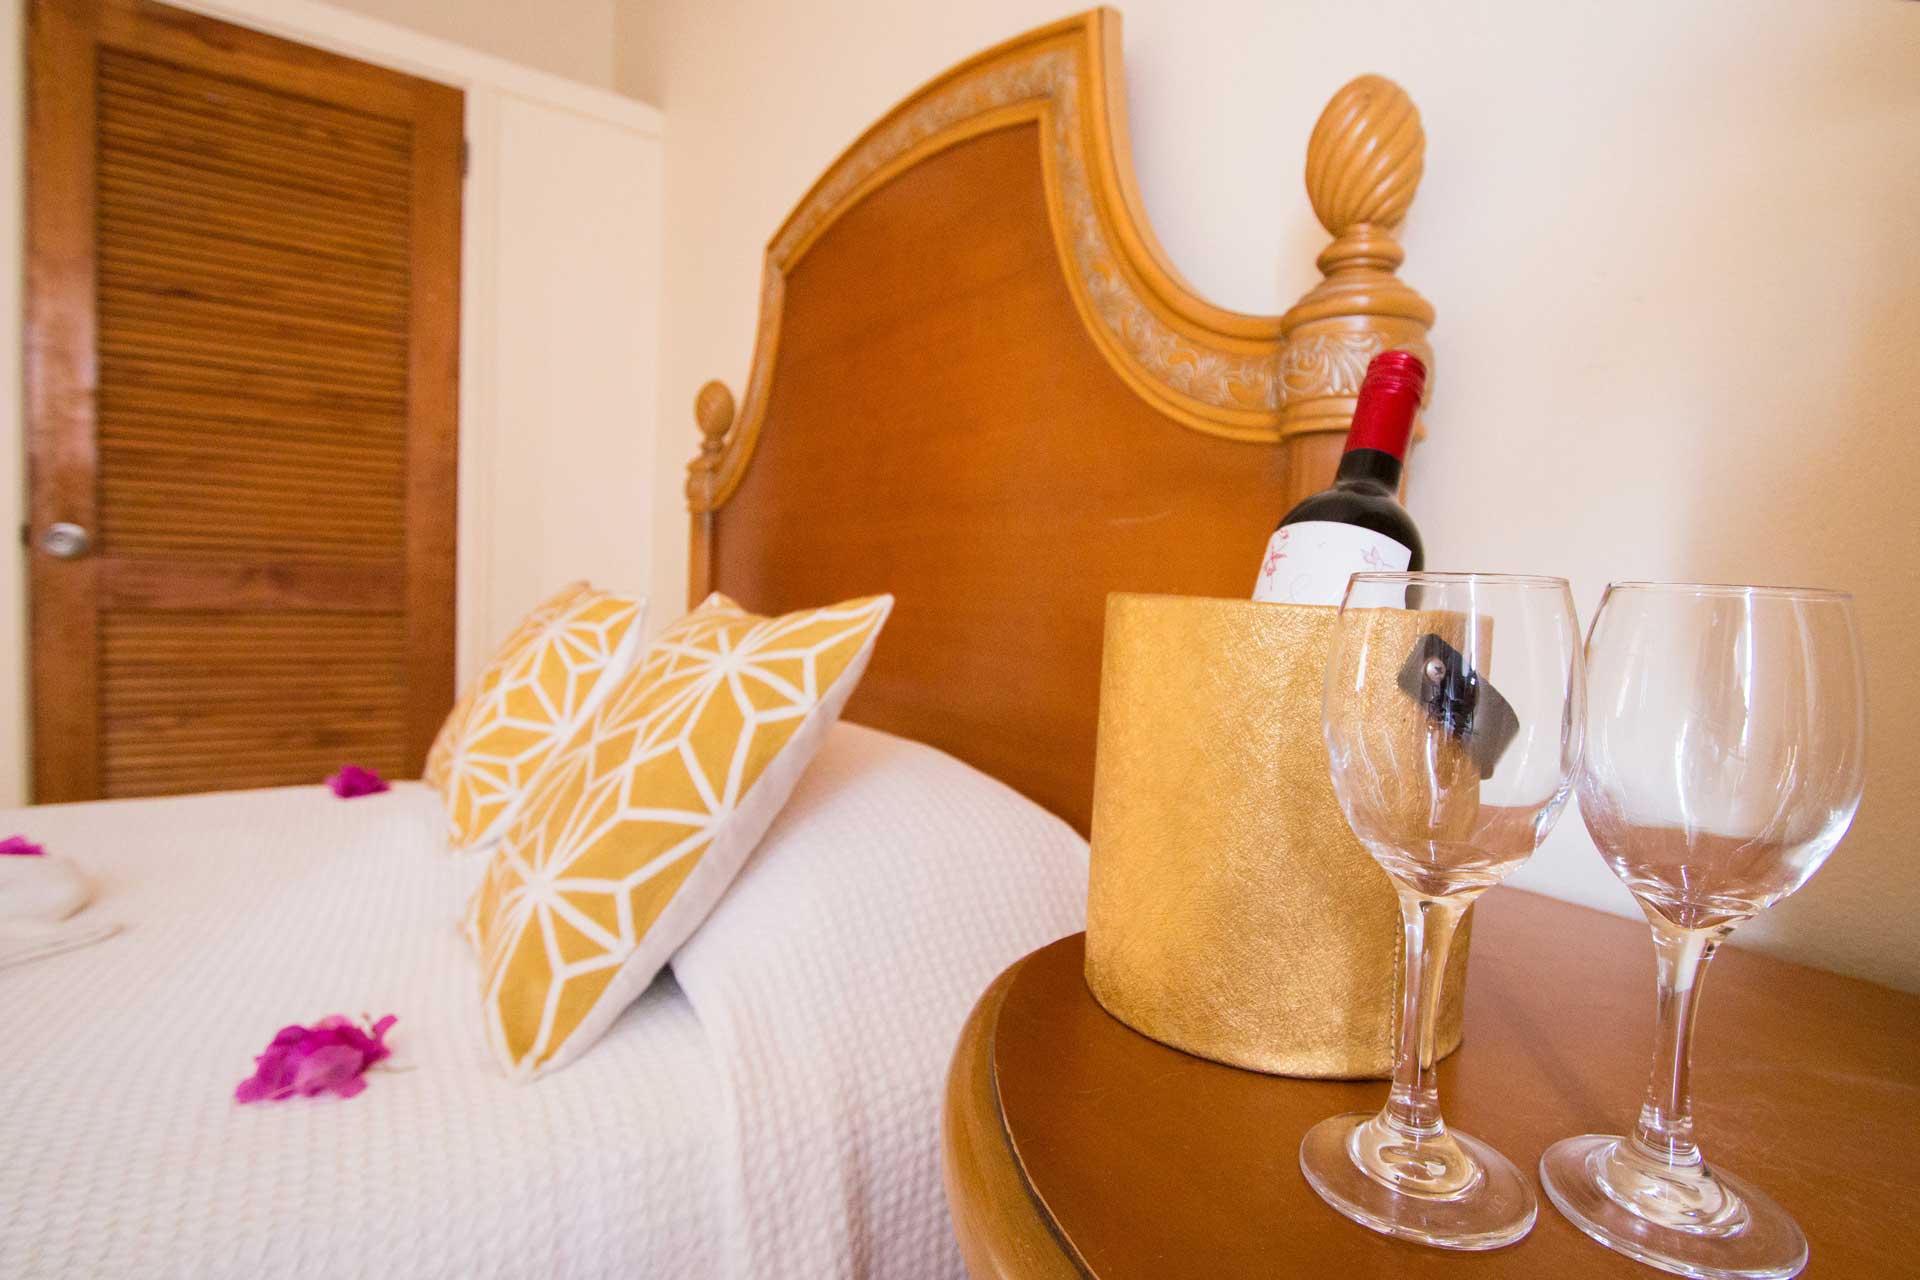 Connies Comfort Suites bedside wine